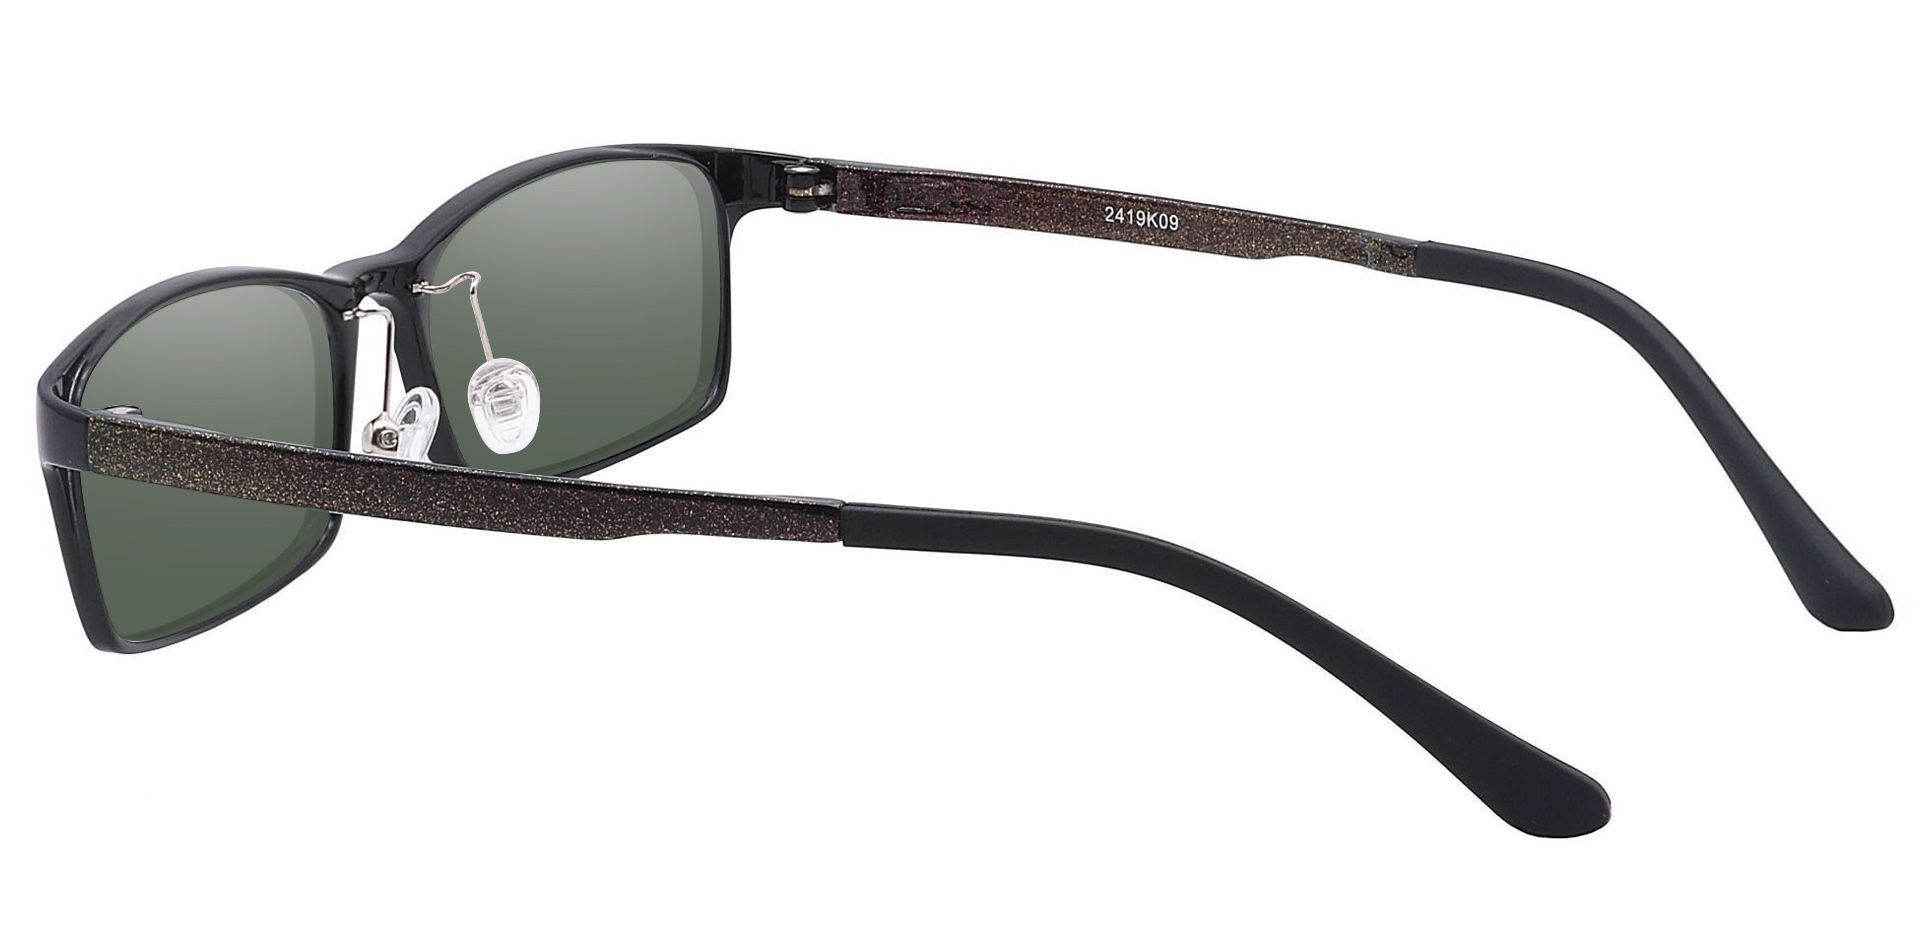 Hydra Rectangle Progressive Sunglasses - Black Frame With Green Lenses